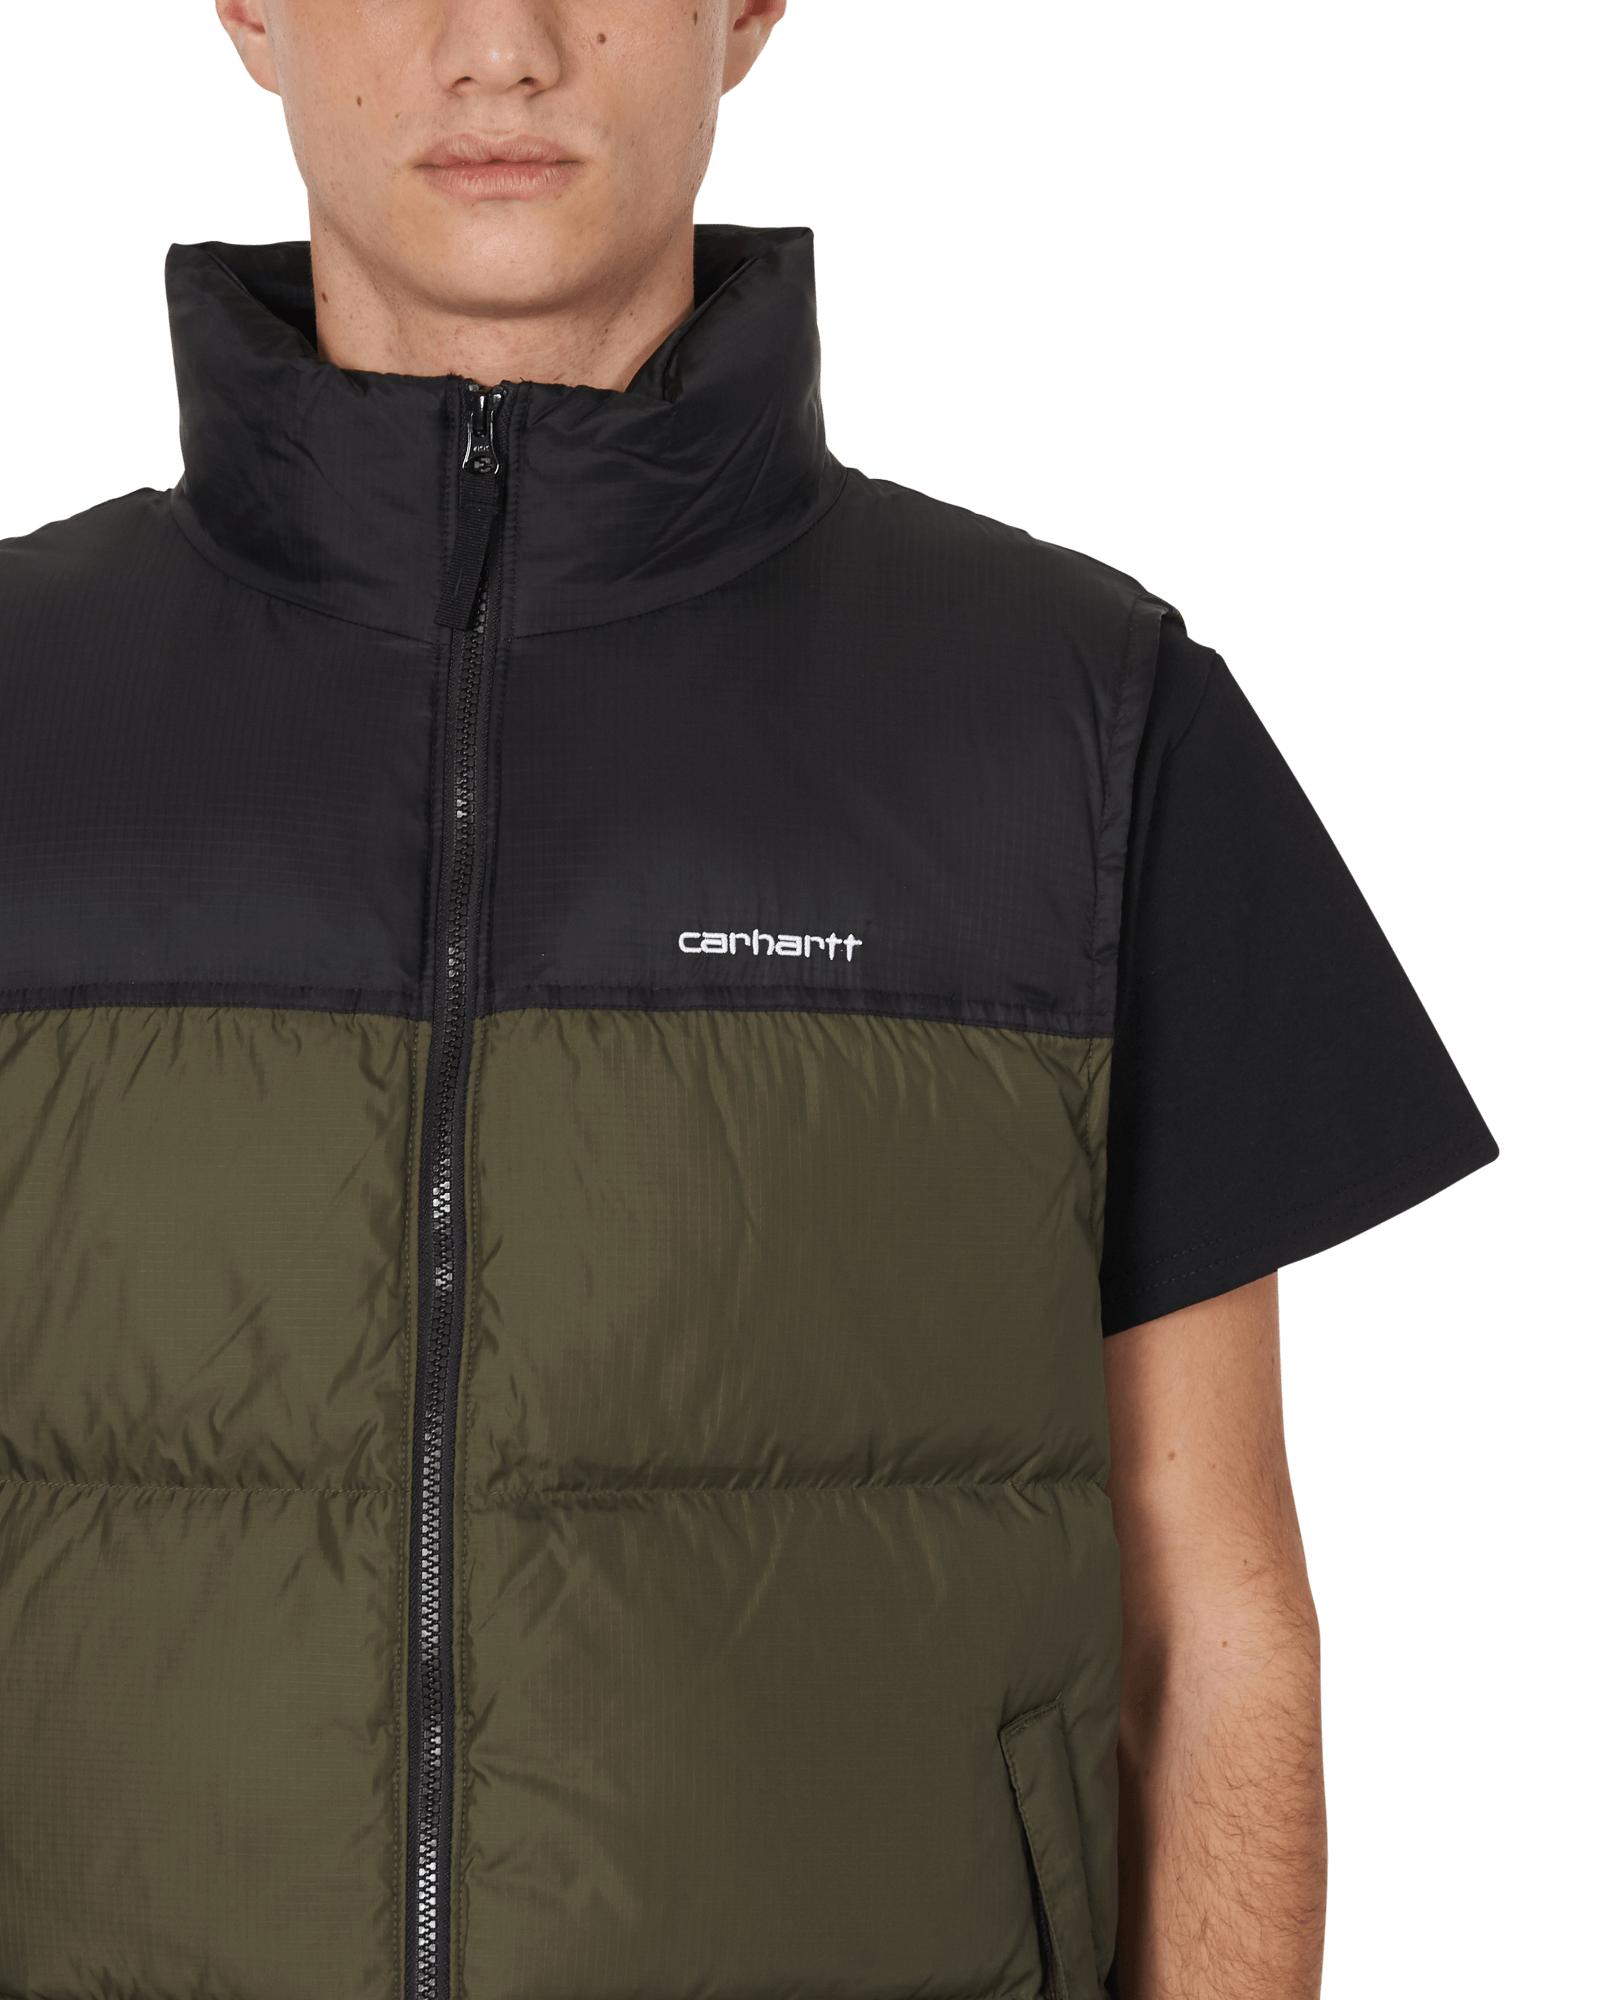 Carhartt WIP Synthetic Lumi Vest for Men - Lyst